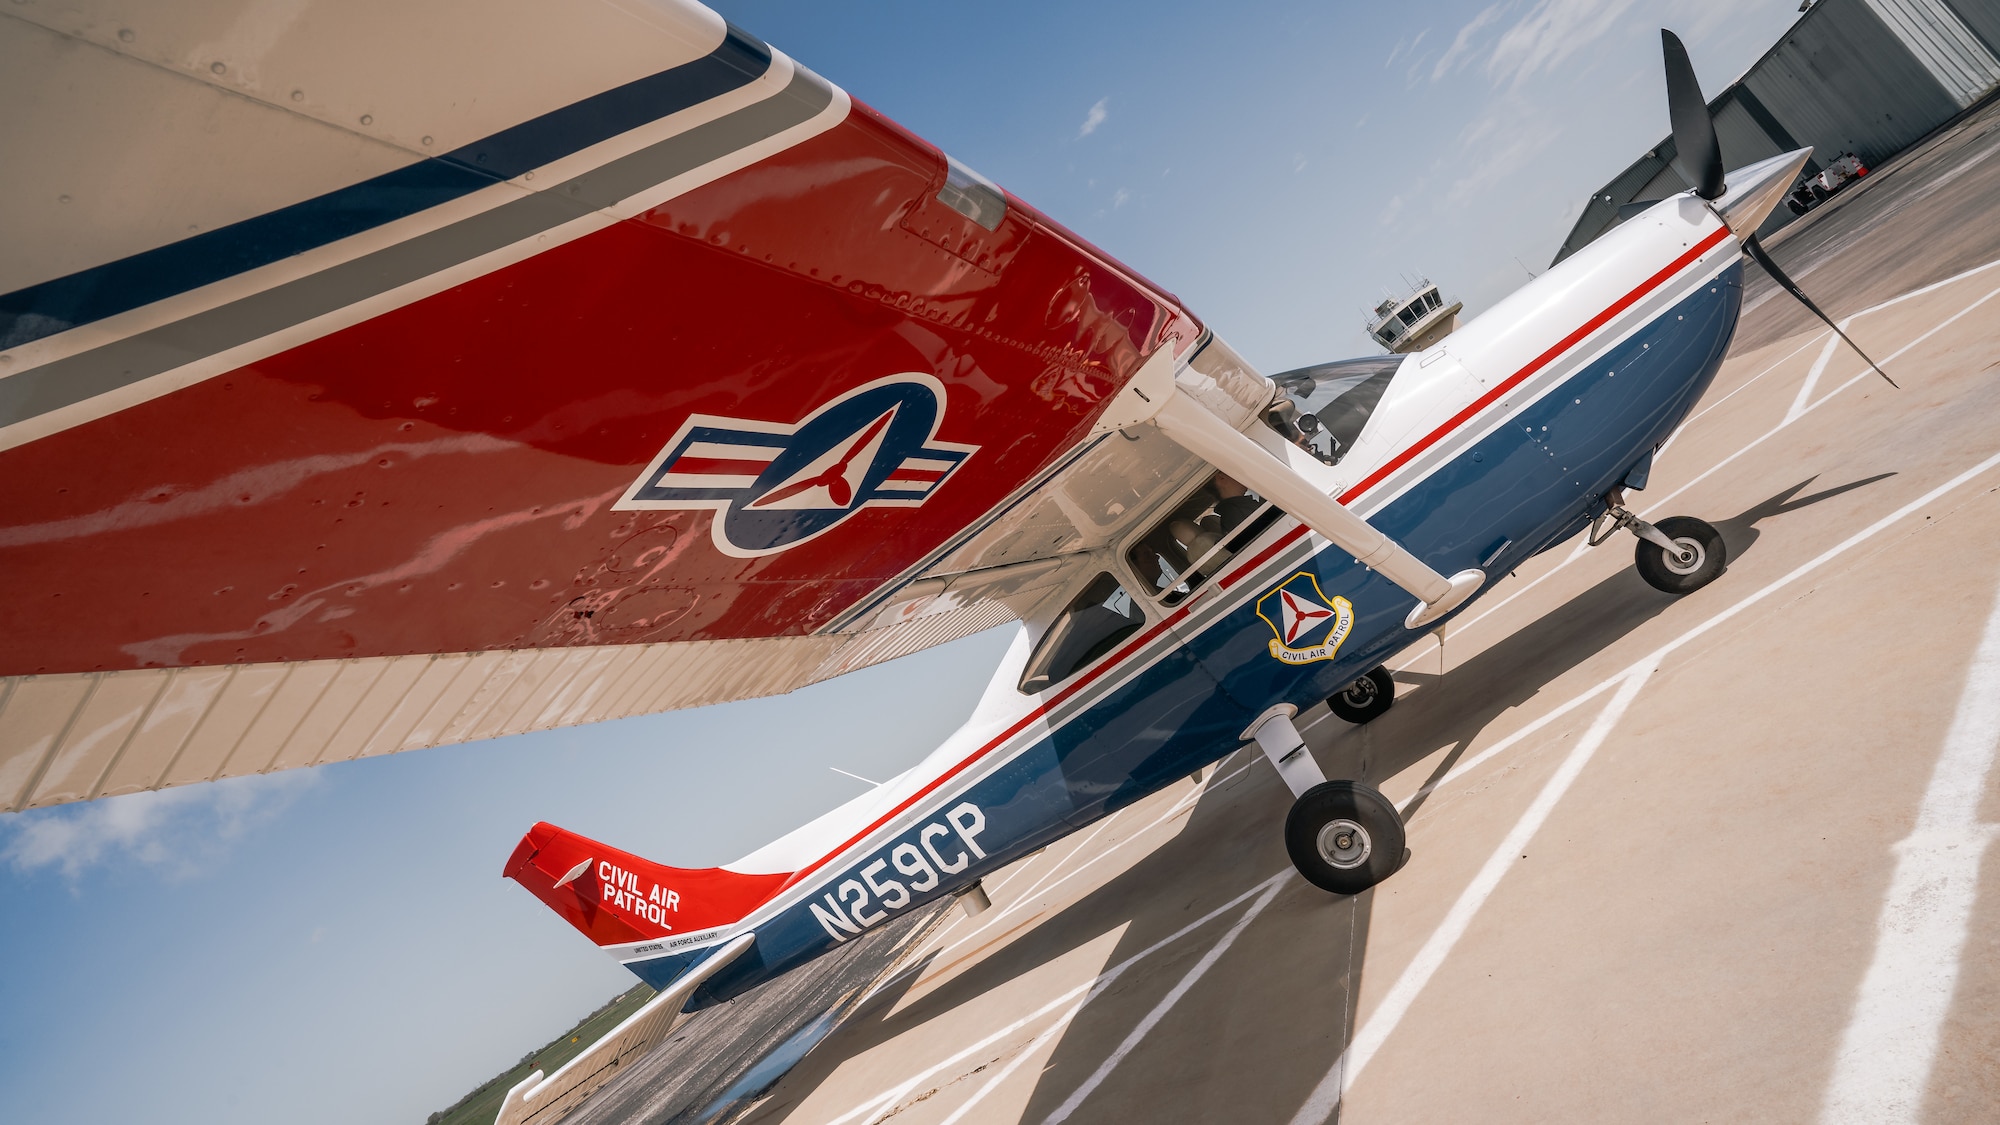 Civil Air Patrol Cessna aircraft prepares for takes off.